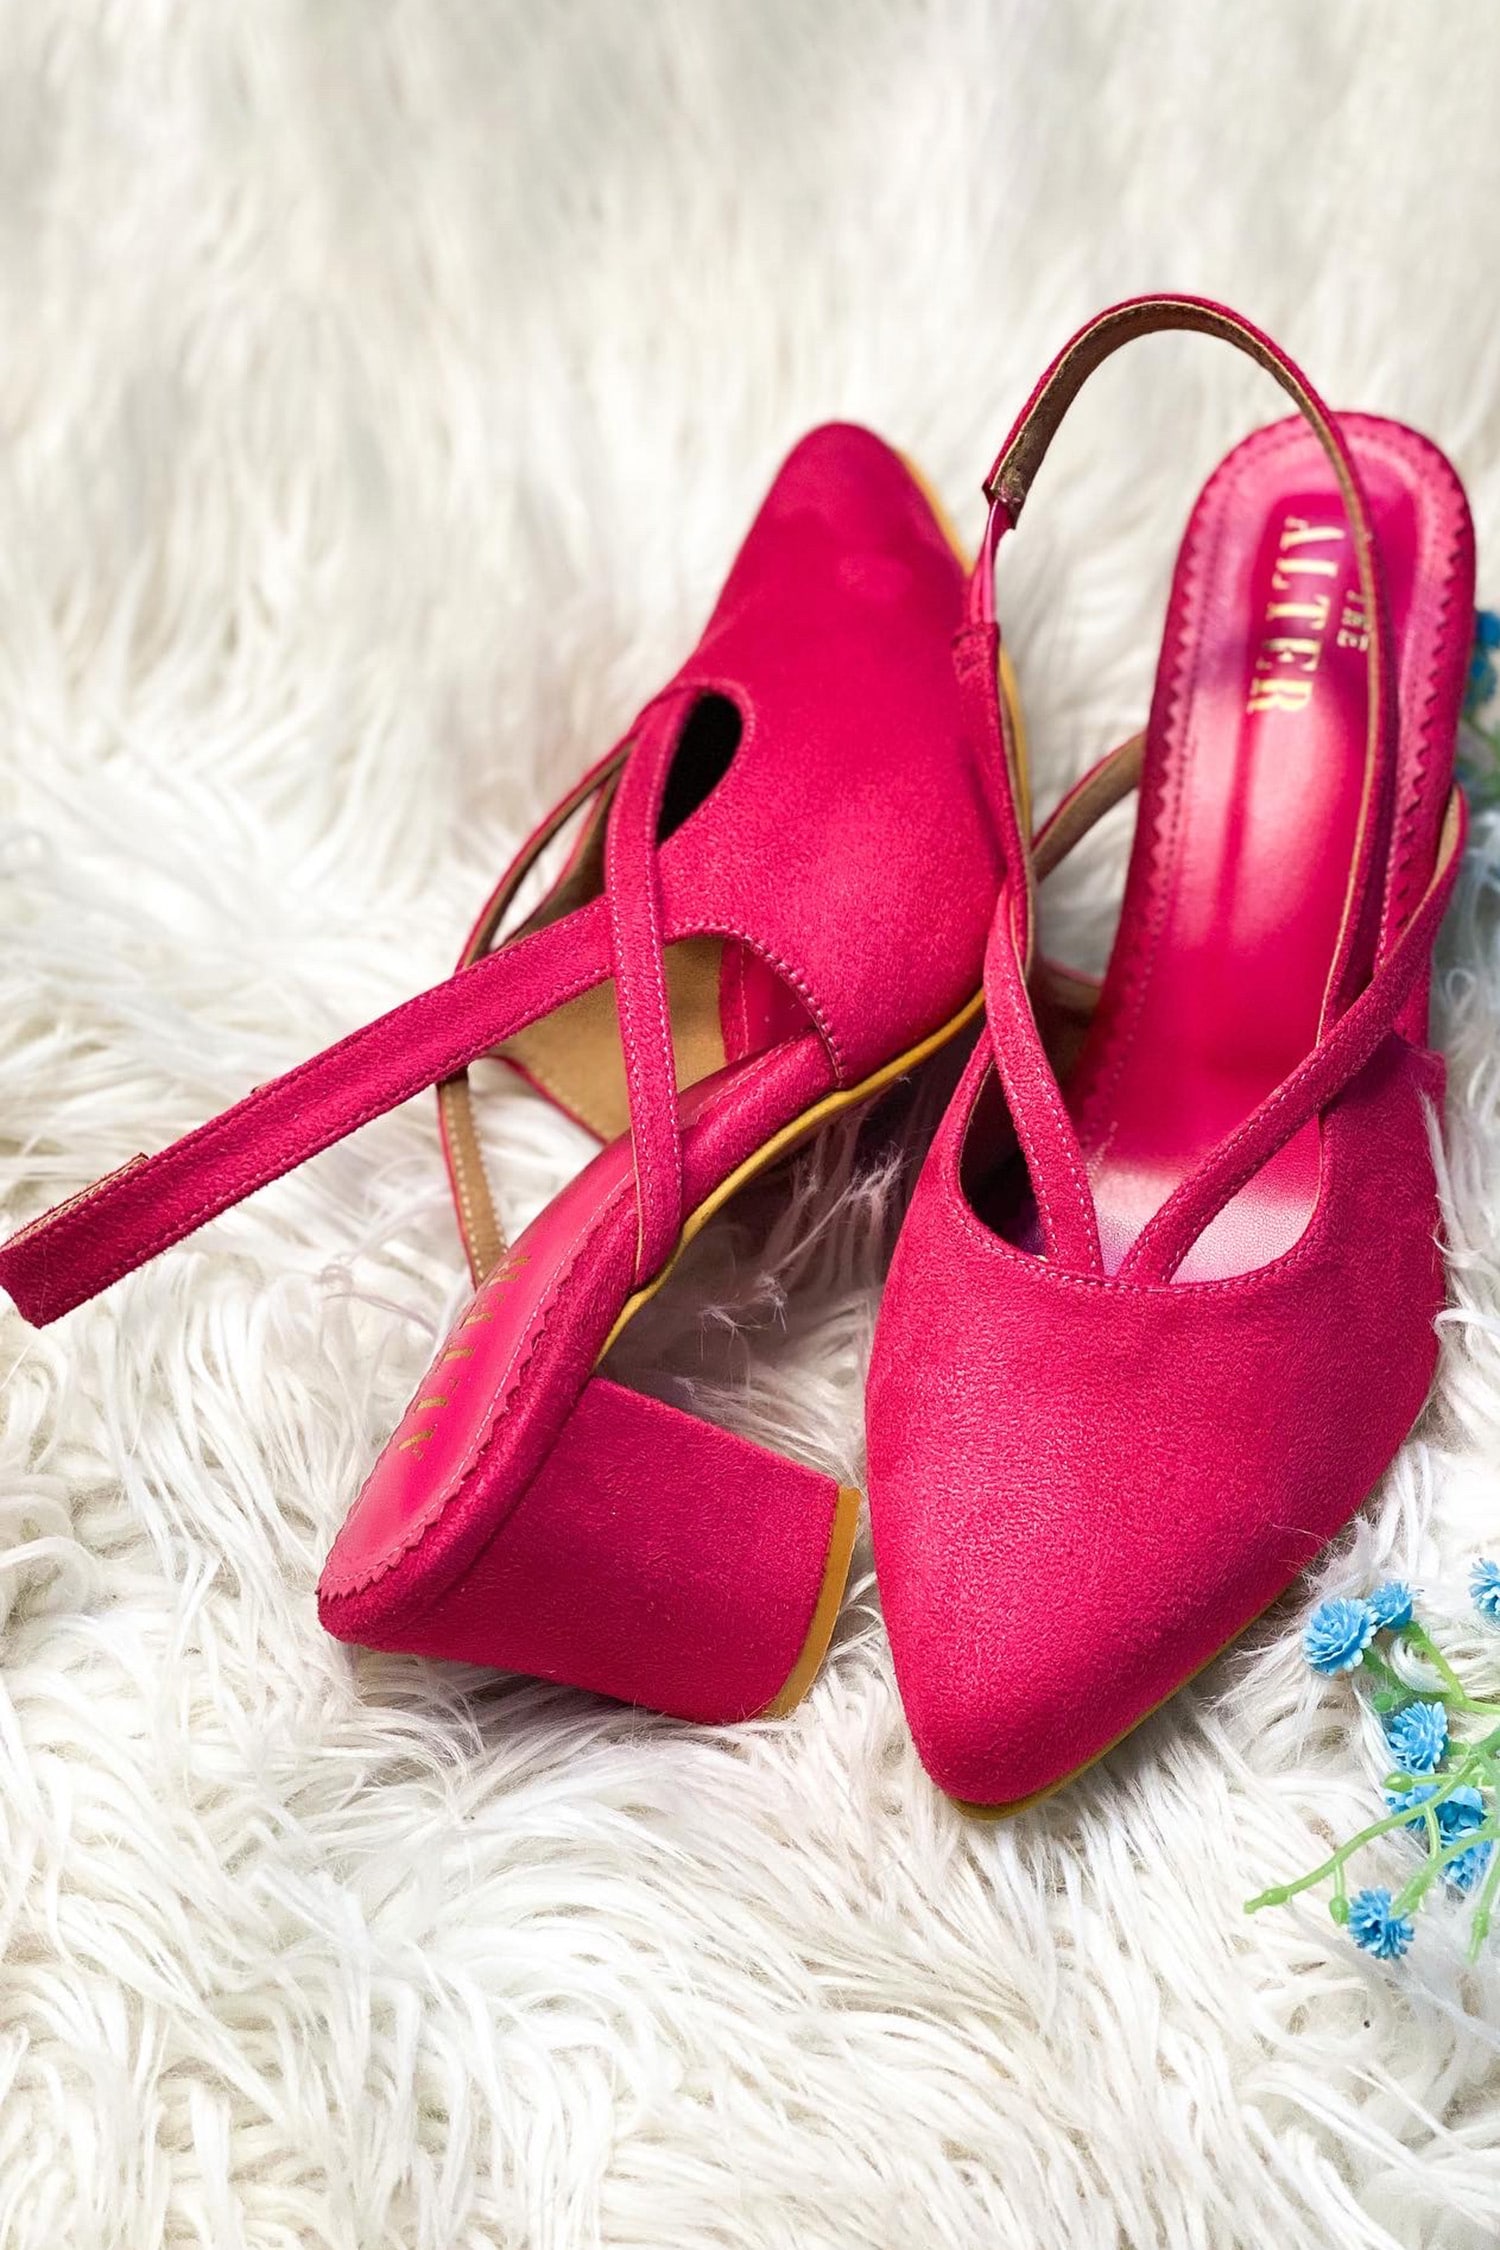 Jessica Simpson Shirley Suede Fuchsia Pink Pump Heels N5176* Size 8.5 M |  eBay